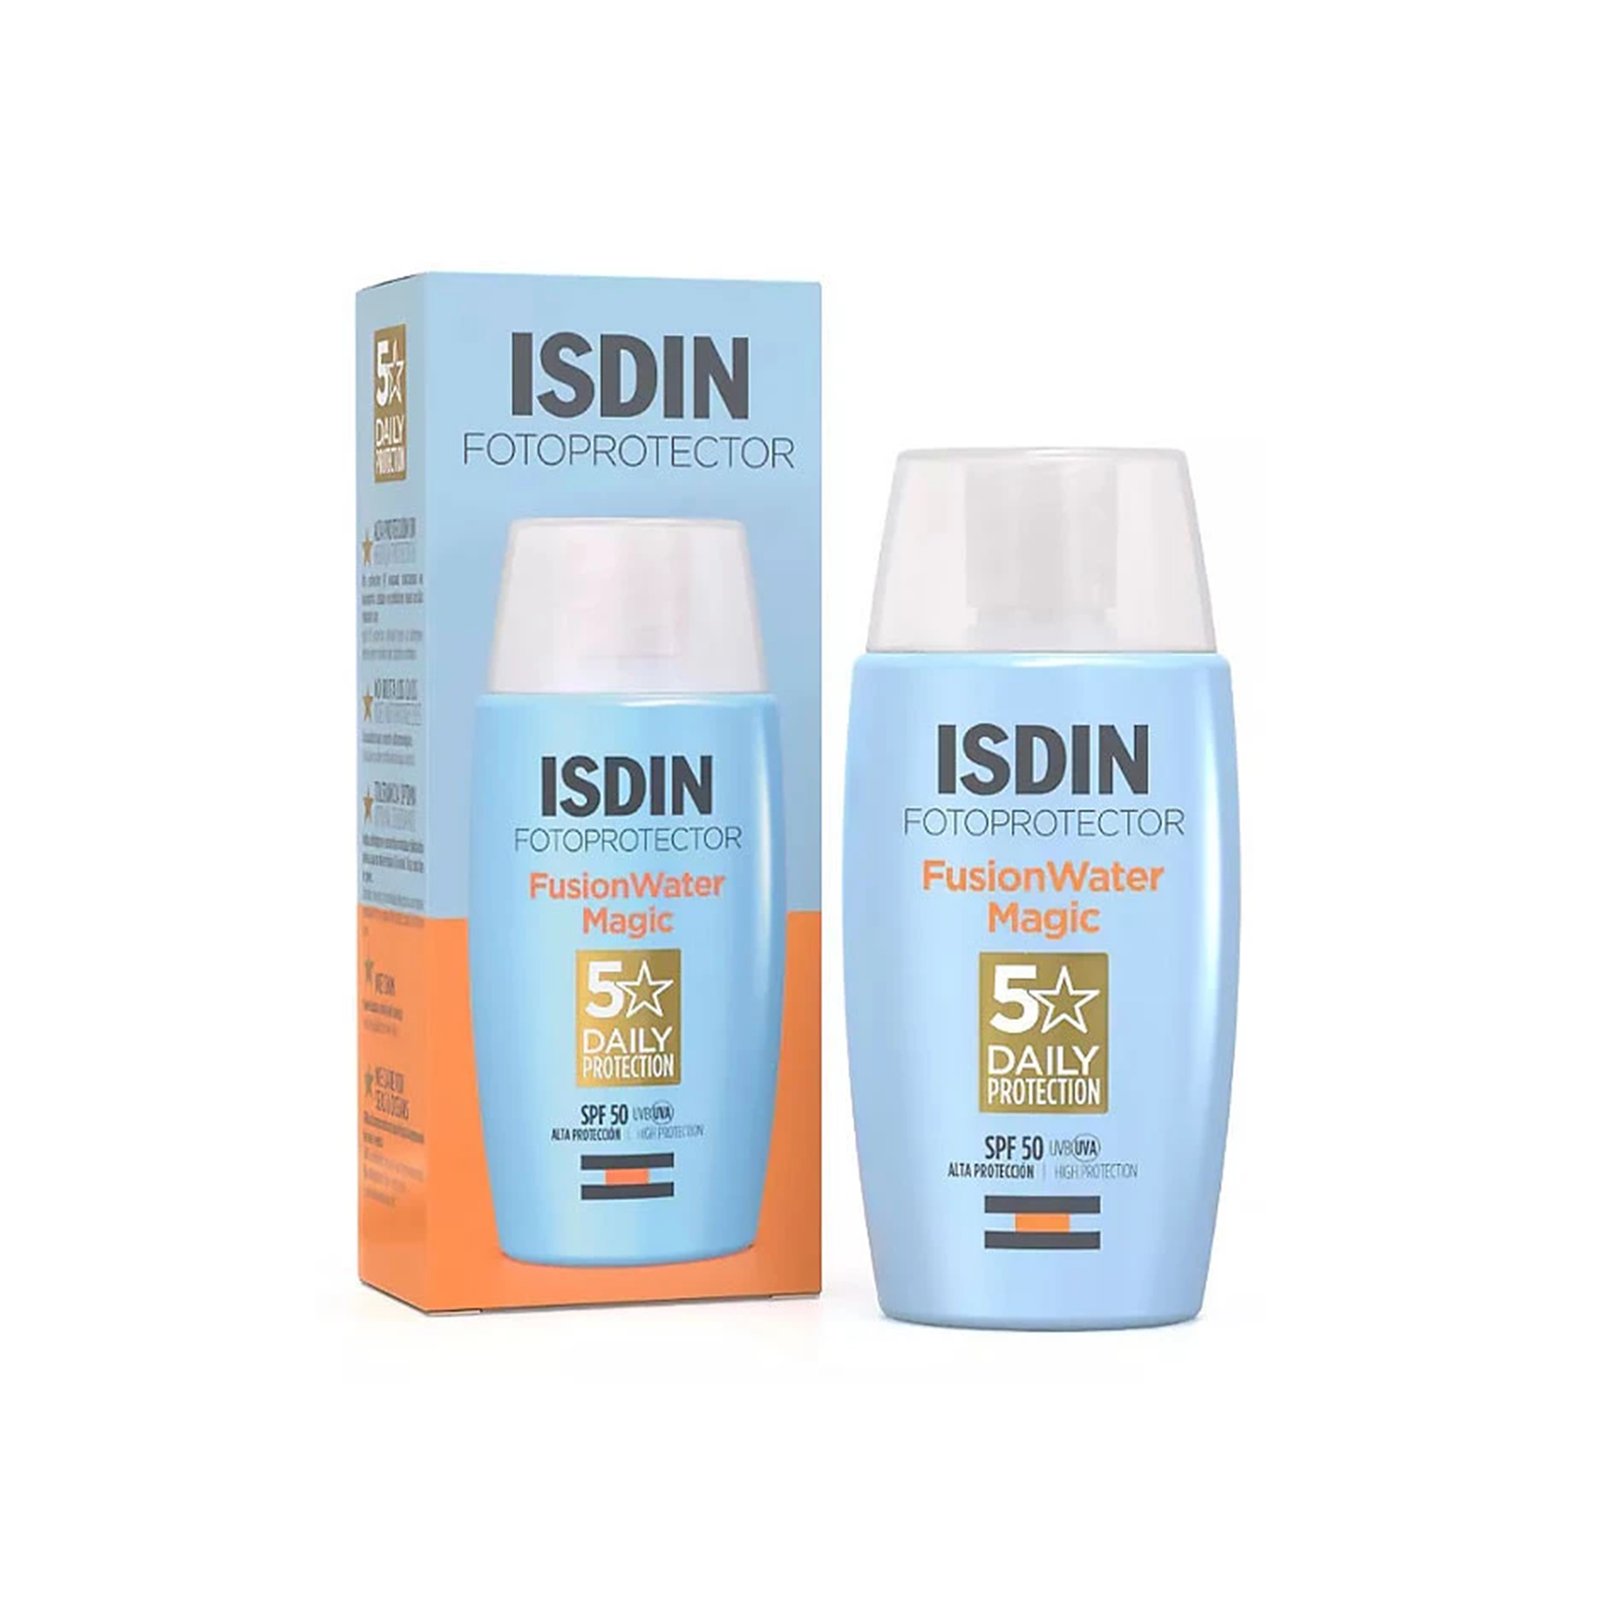 ISDIN Fotoprotector Fusion Water Magic SPF50 50ml (1.69fl oz)